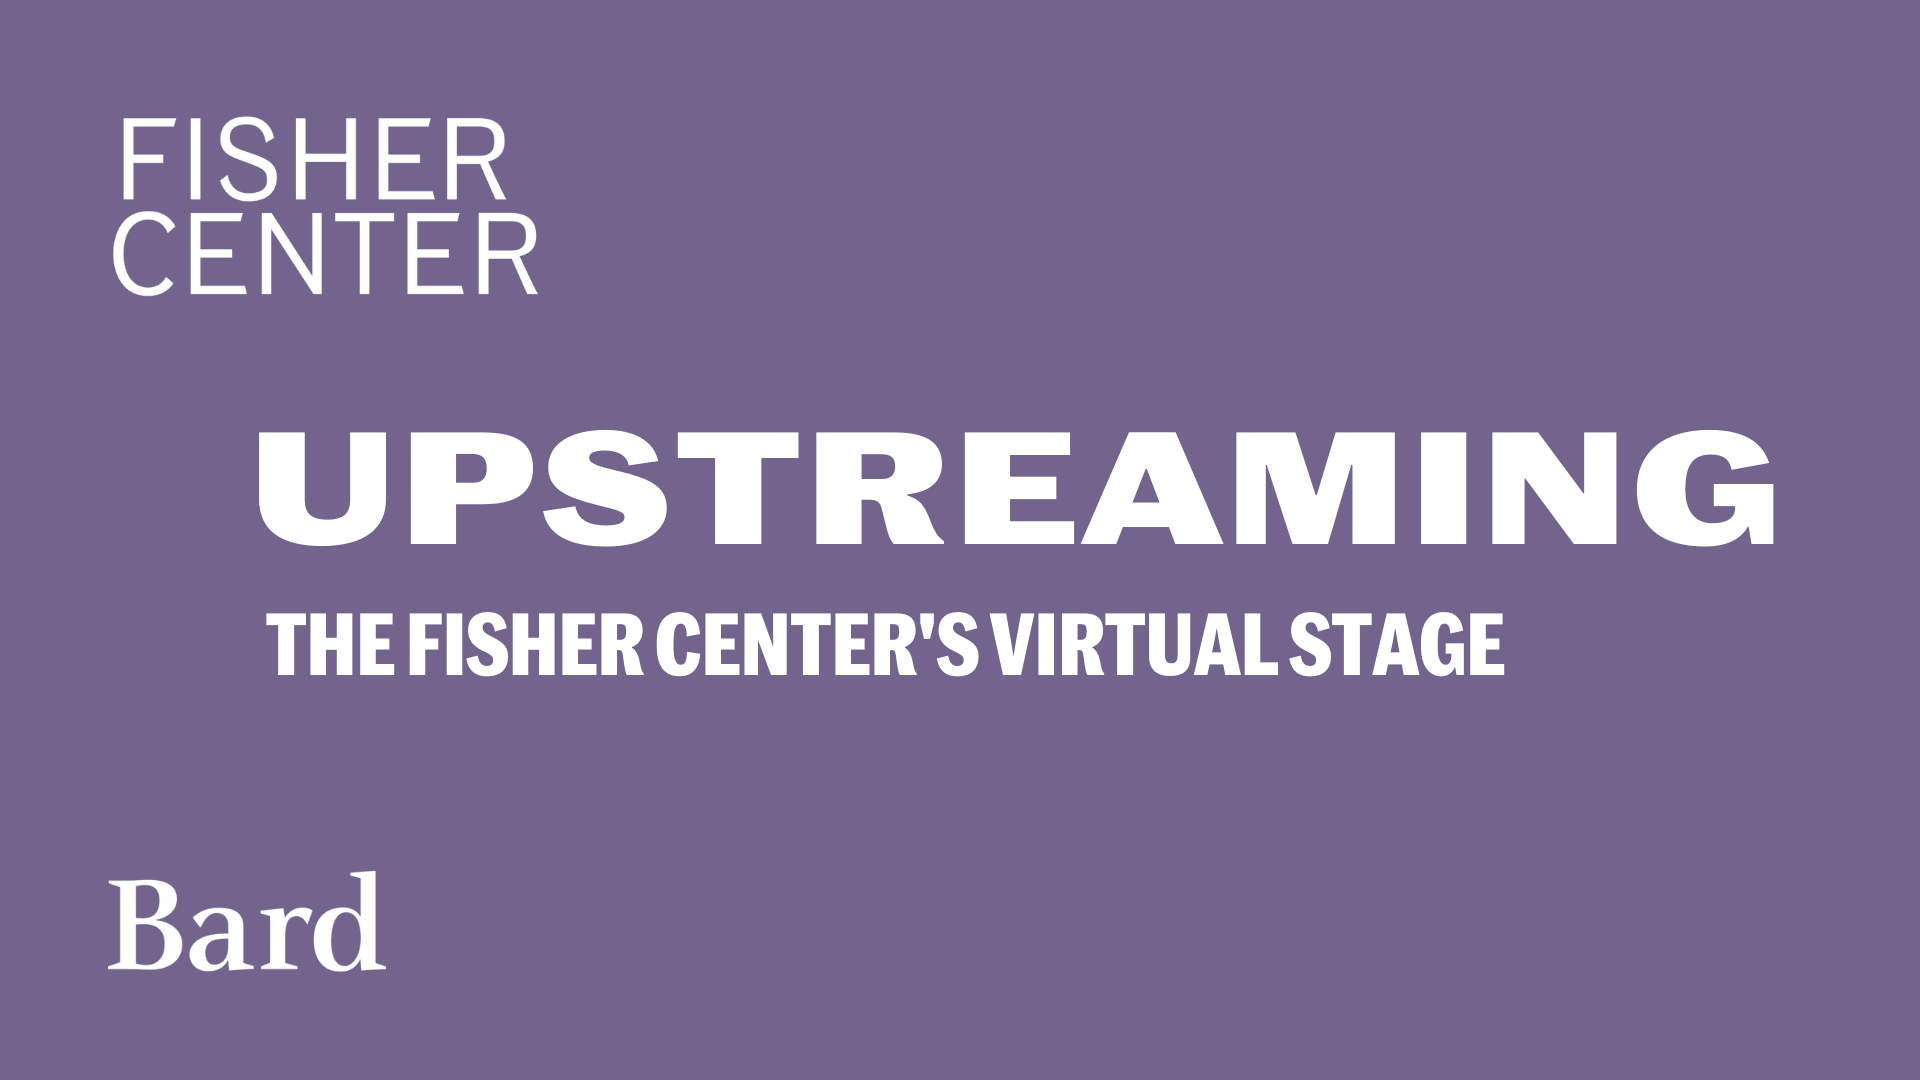 Visit https://fishercenter.bard.edu/events/UPS-live-arts-bard